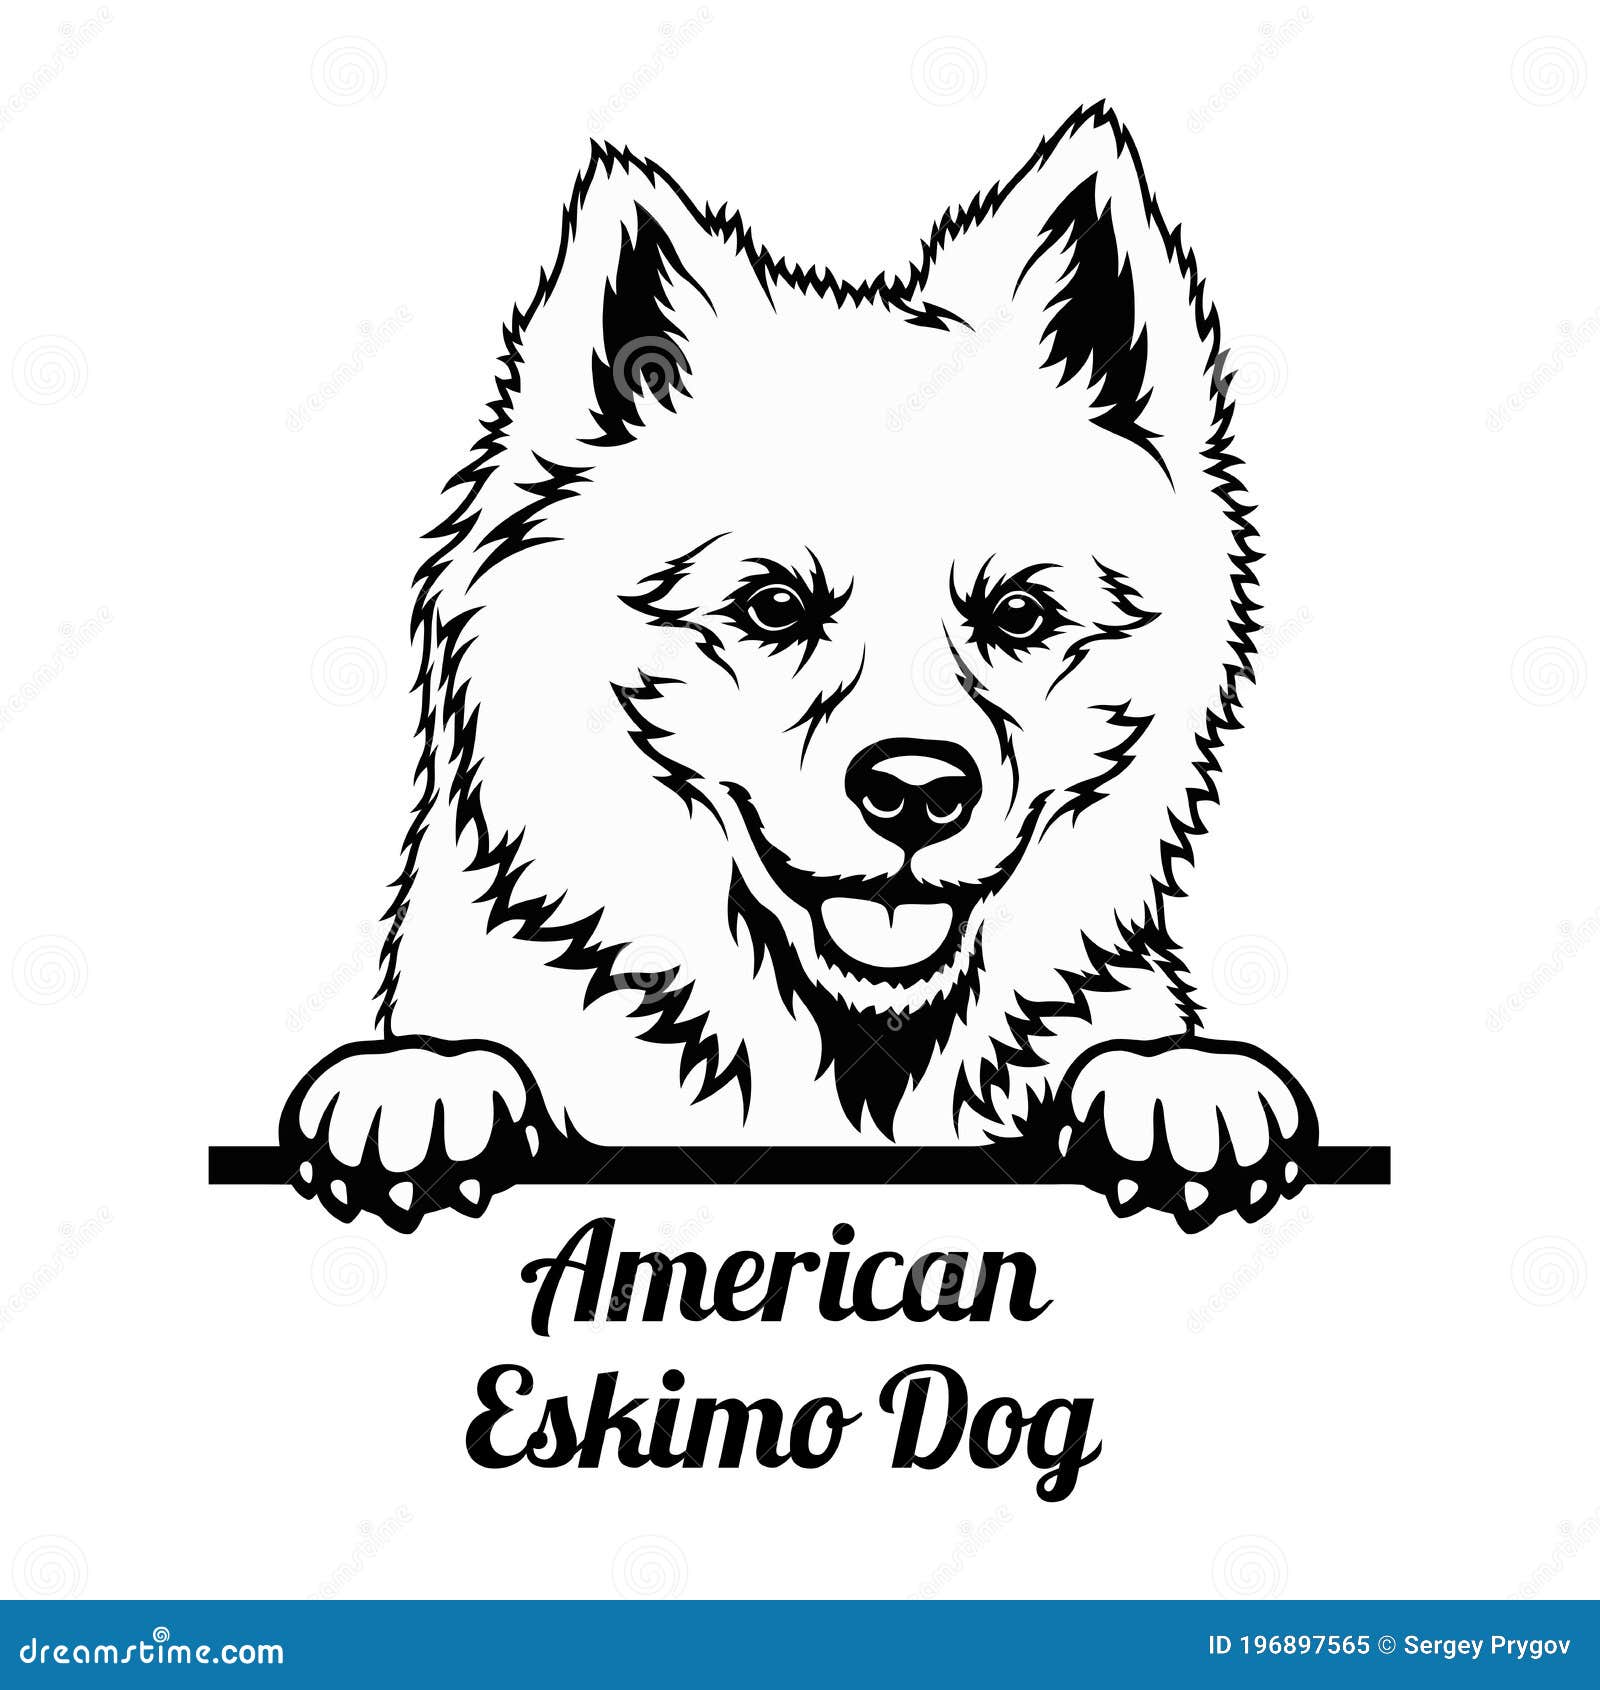 peeking dog - american eskimo dog breed - head  on white